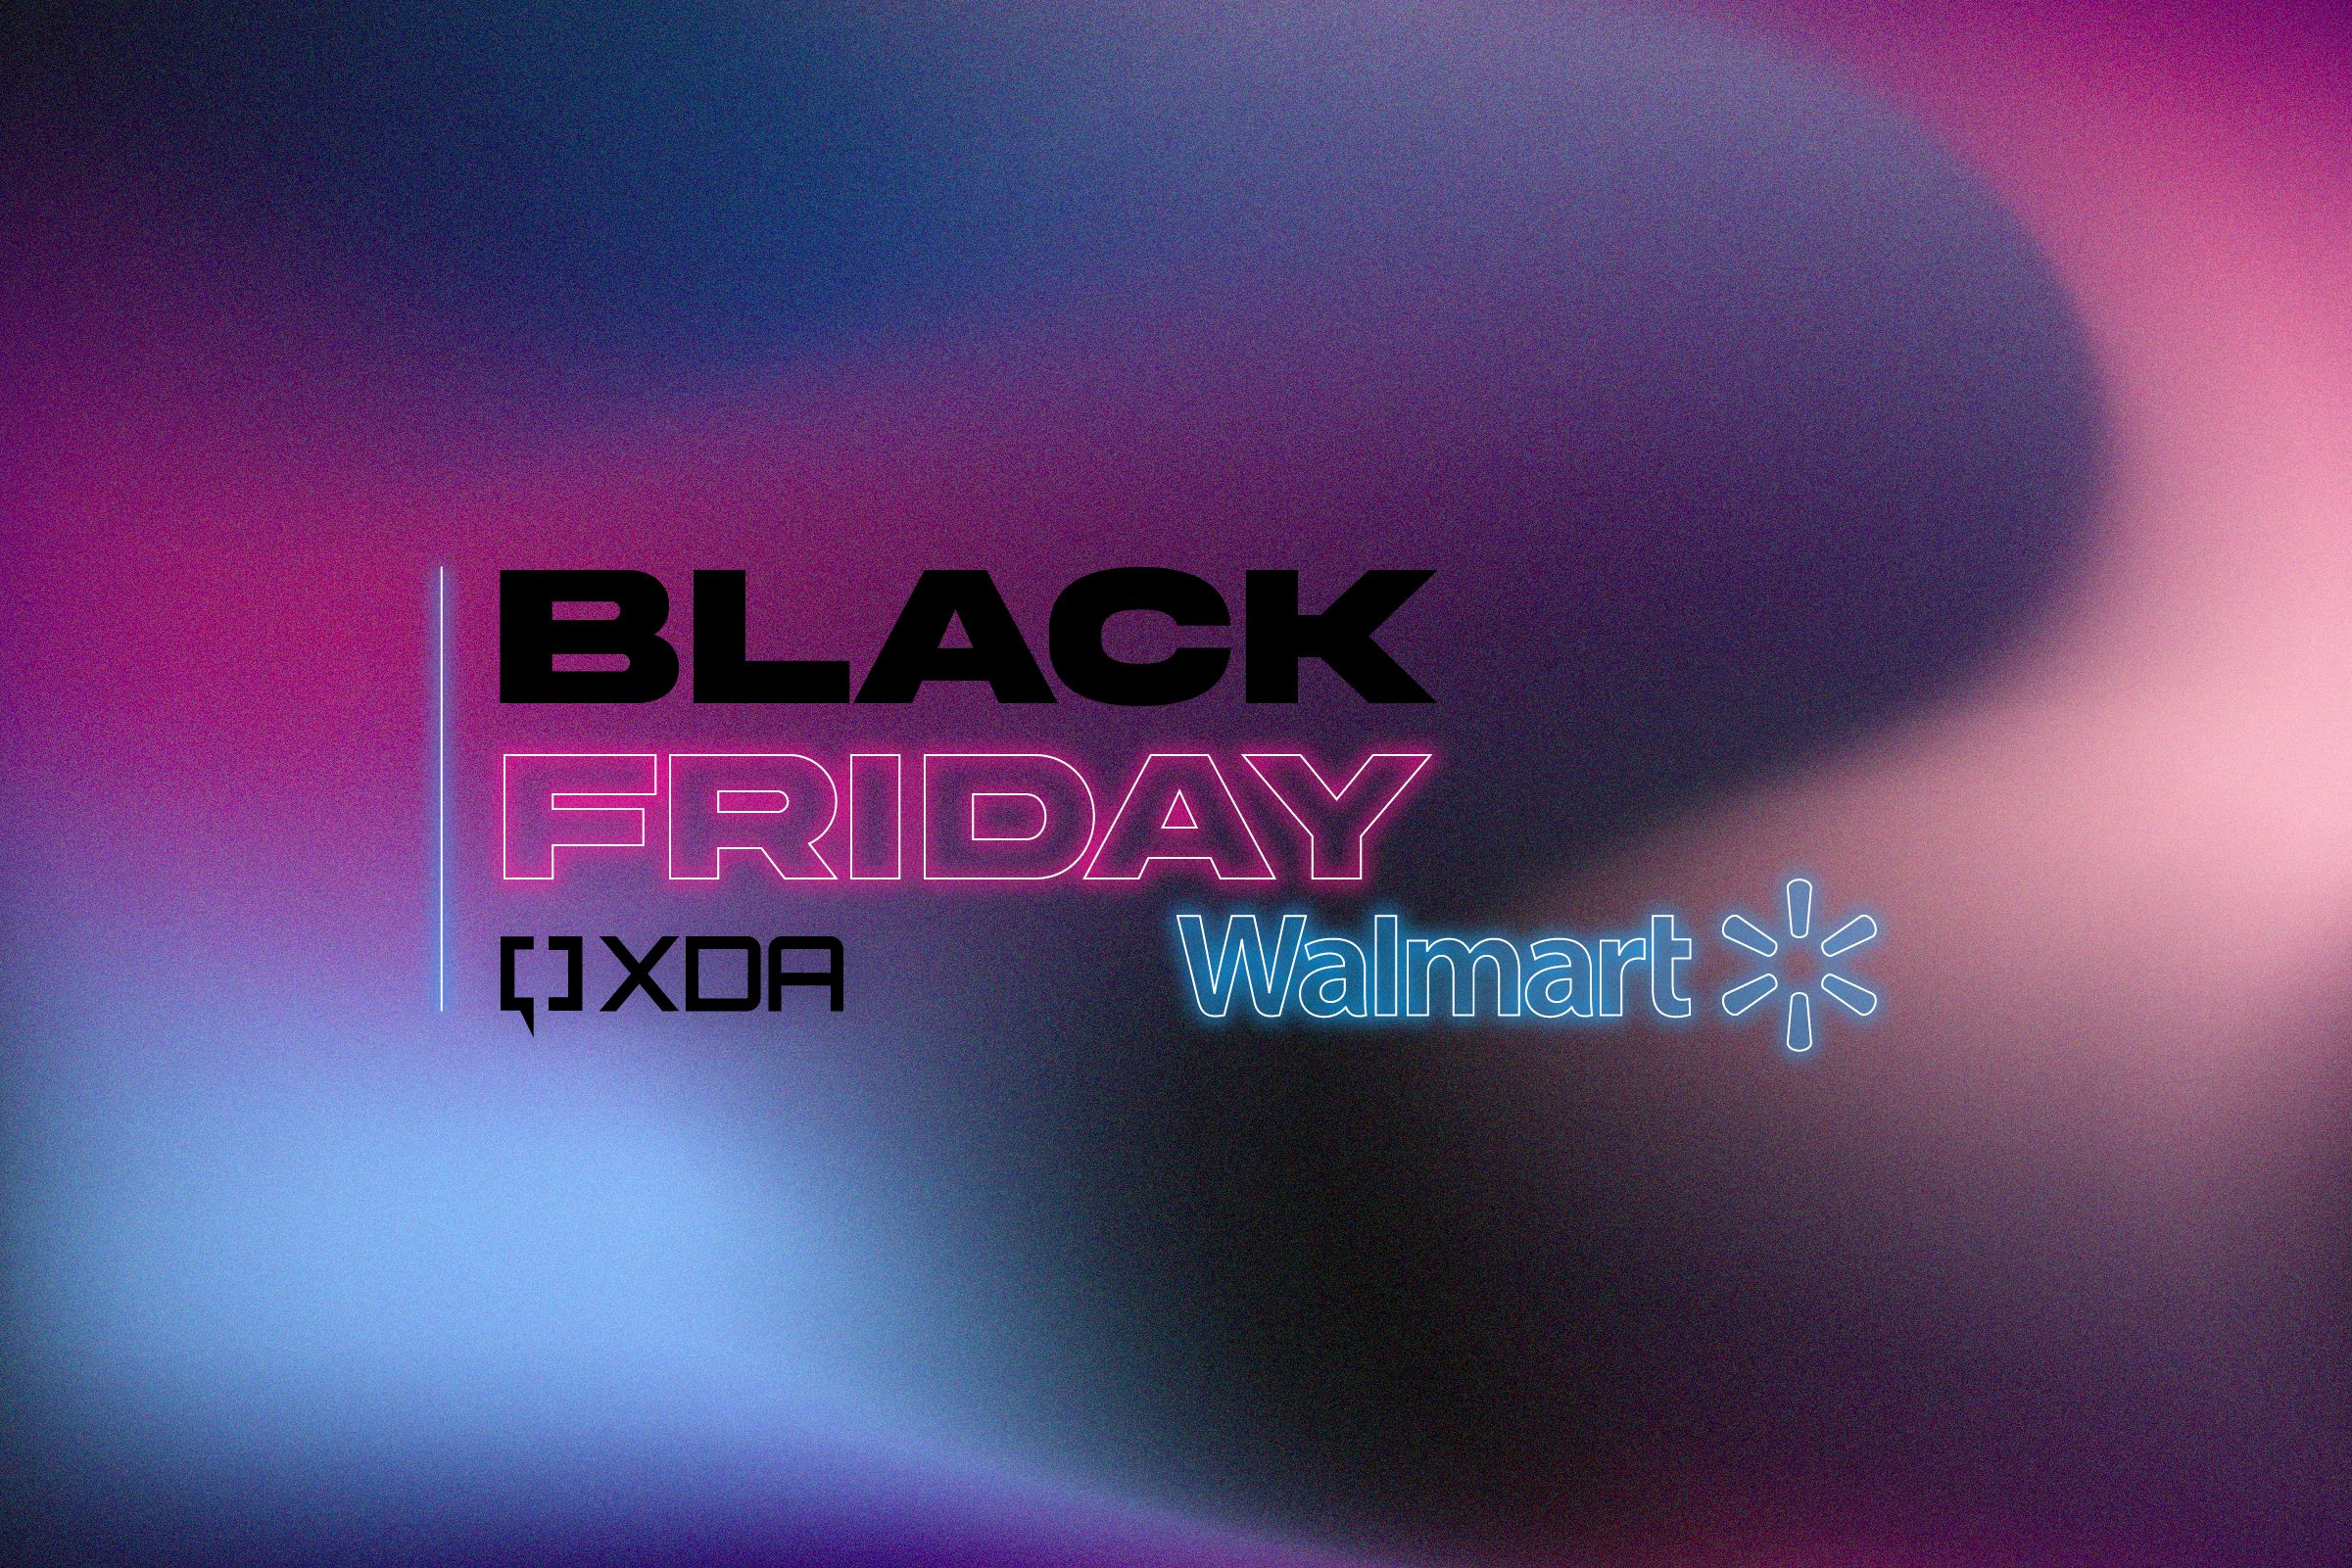 Walmart Black Friday Deals XDA